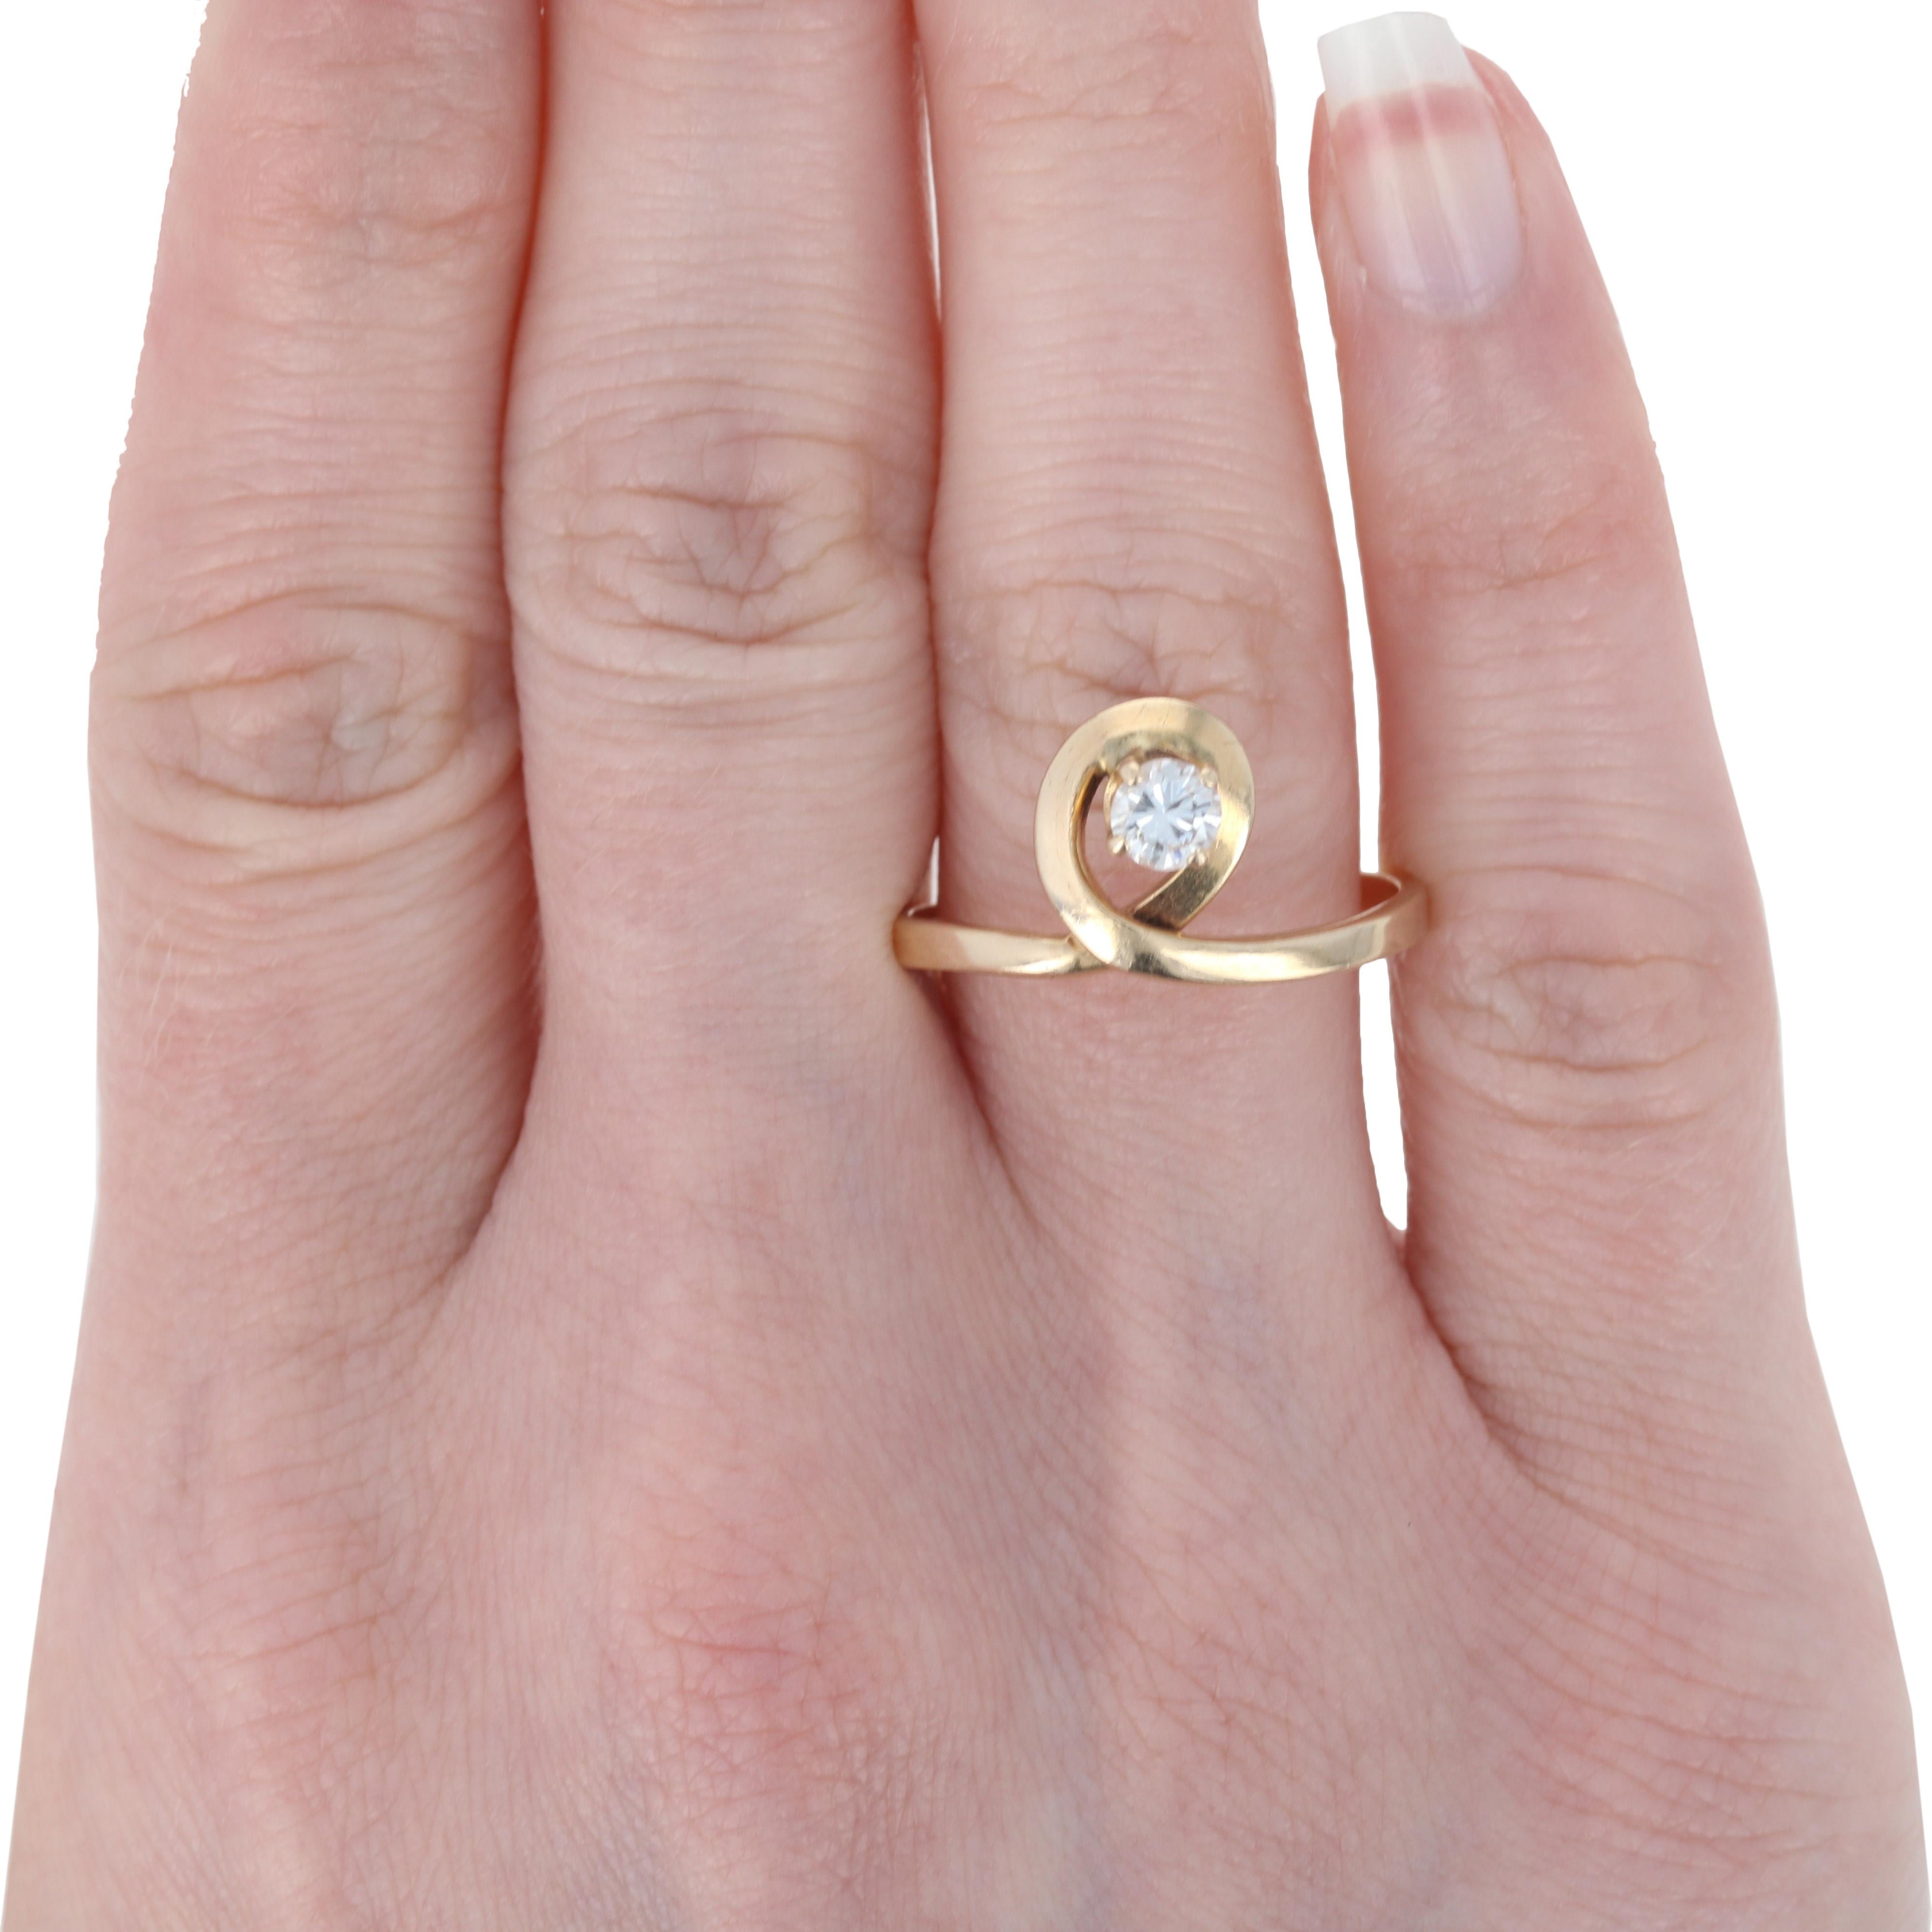 aria montgomery engagement ring